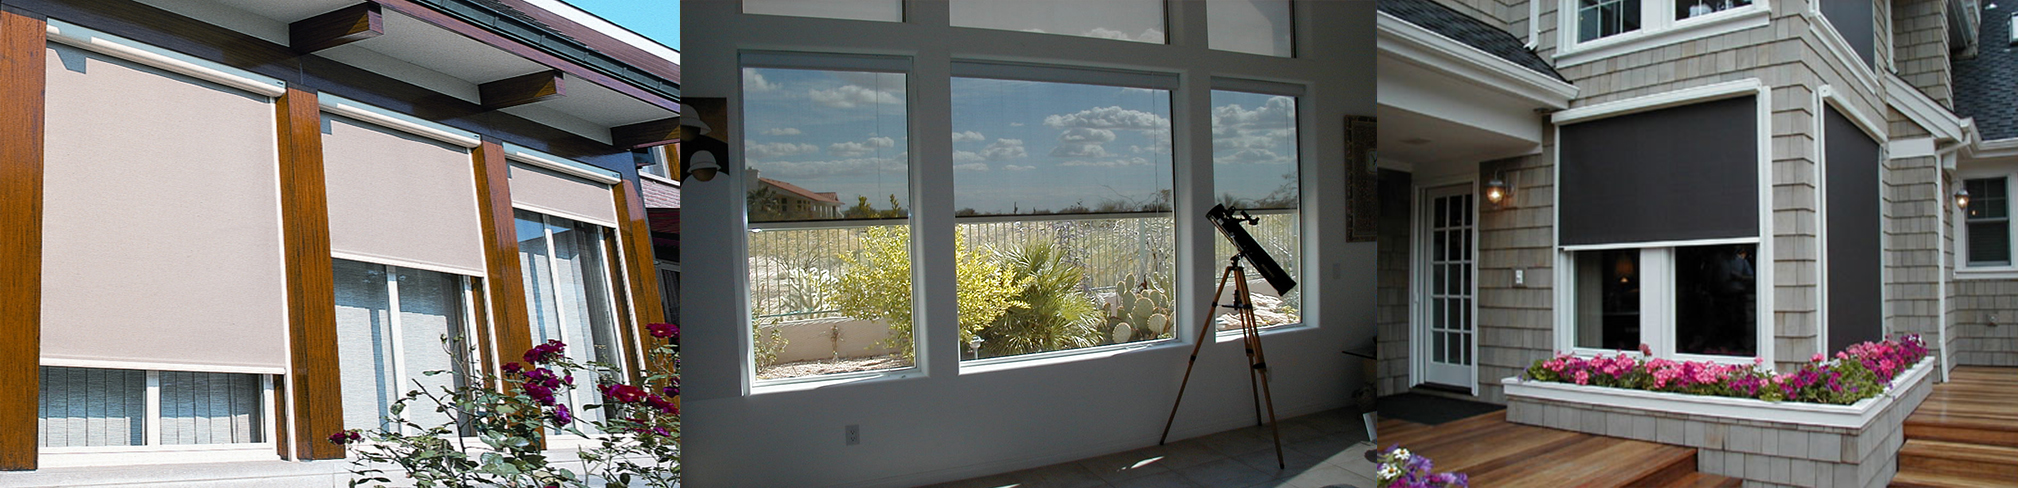 Exterior Window Solar Screens